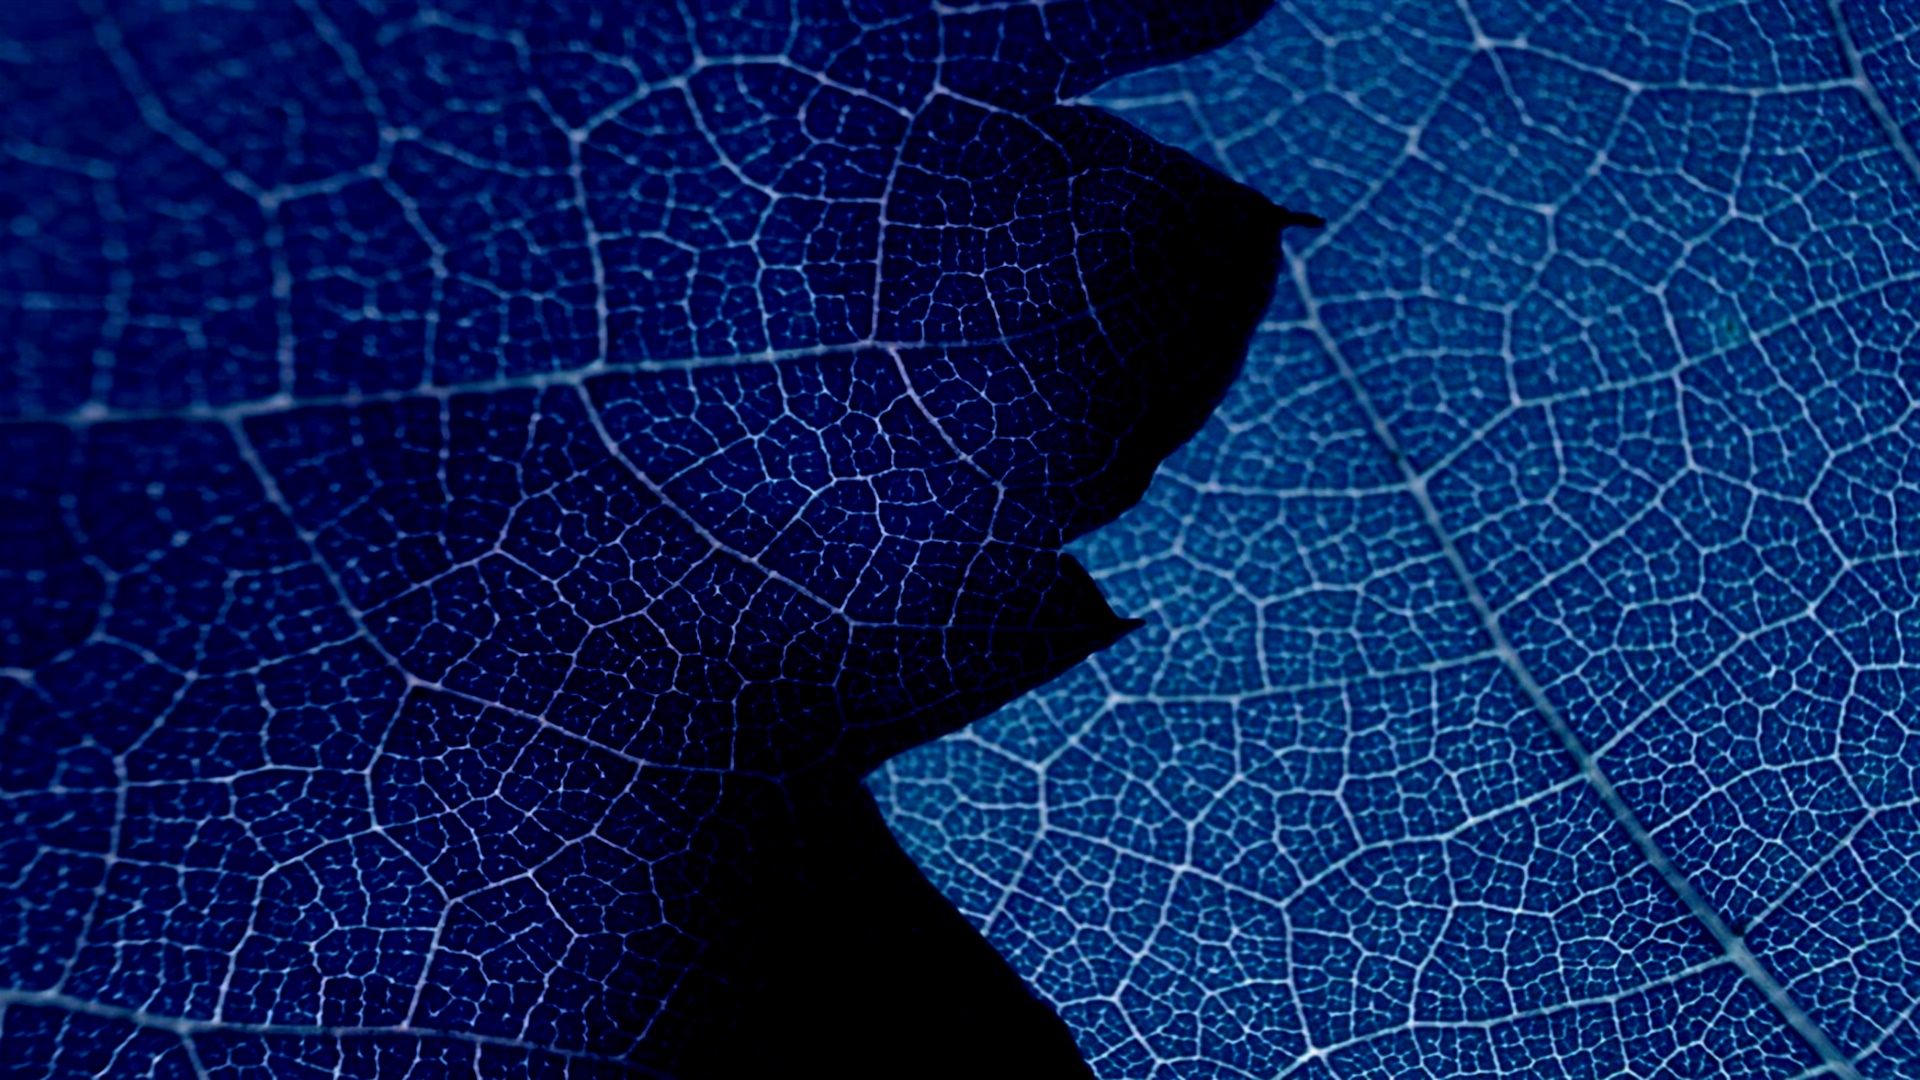 Blue leaf wallpaper - backiee